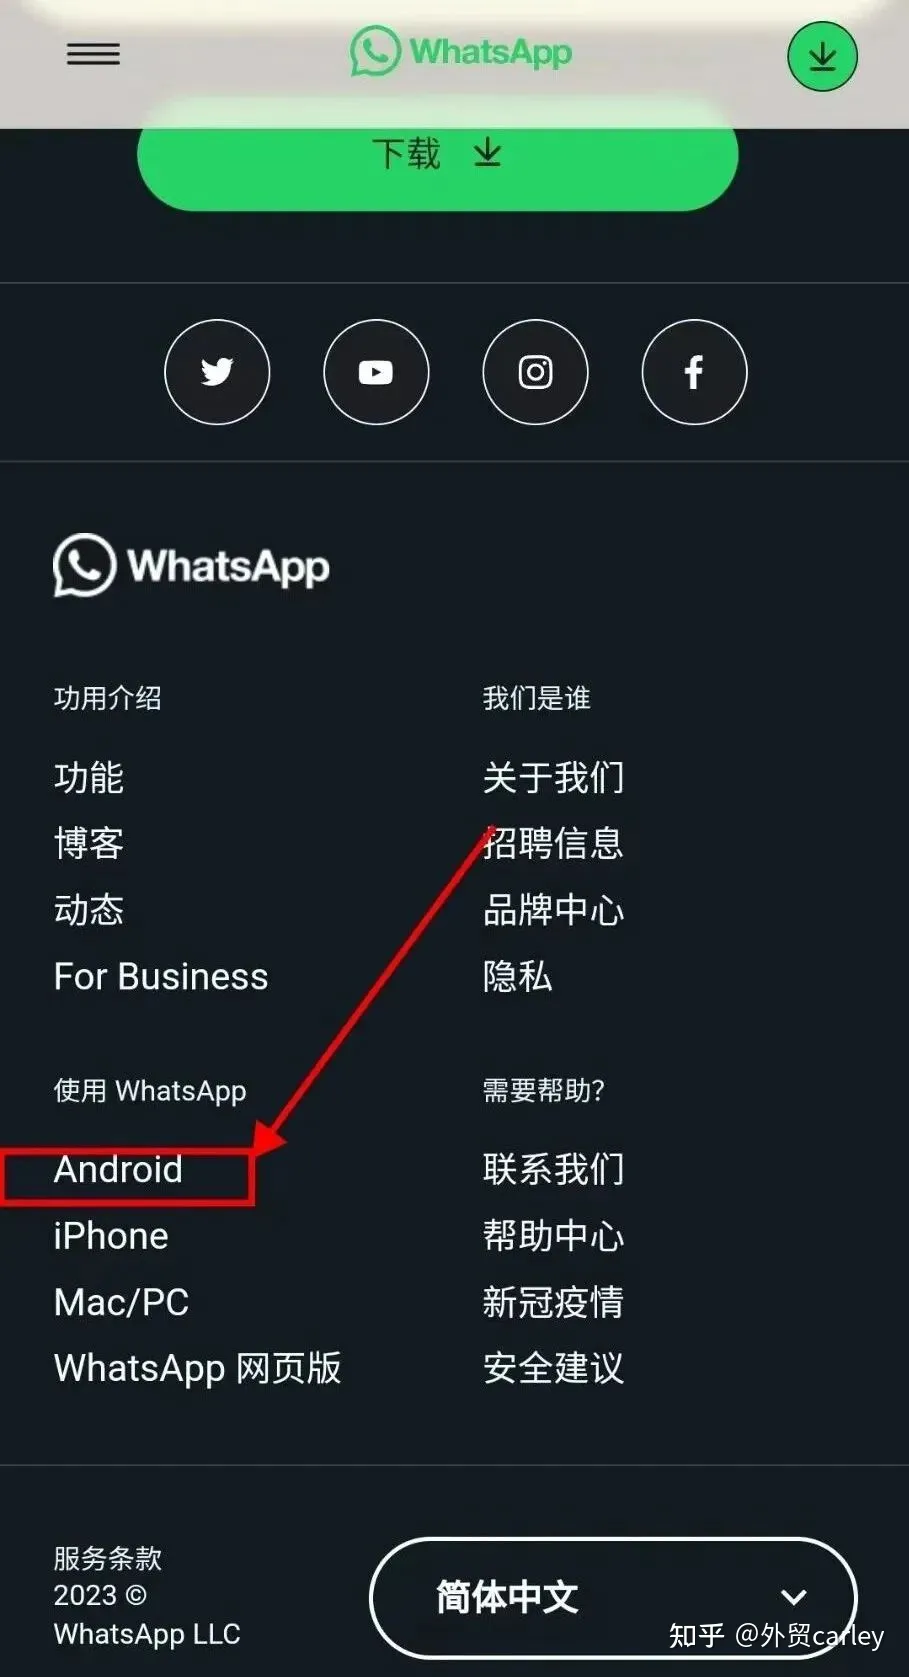 whatsapp在国内_whatsapp在国内能用吗?